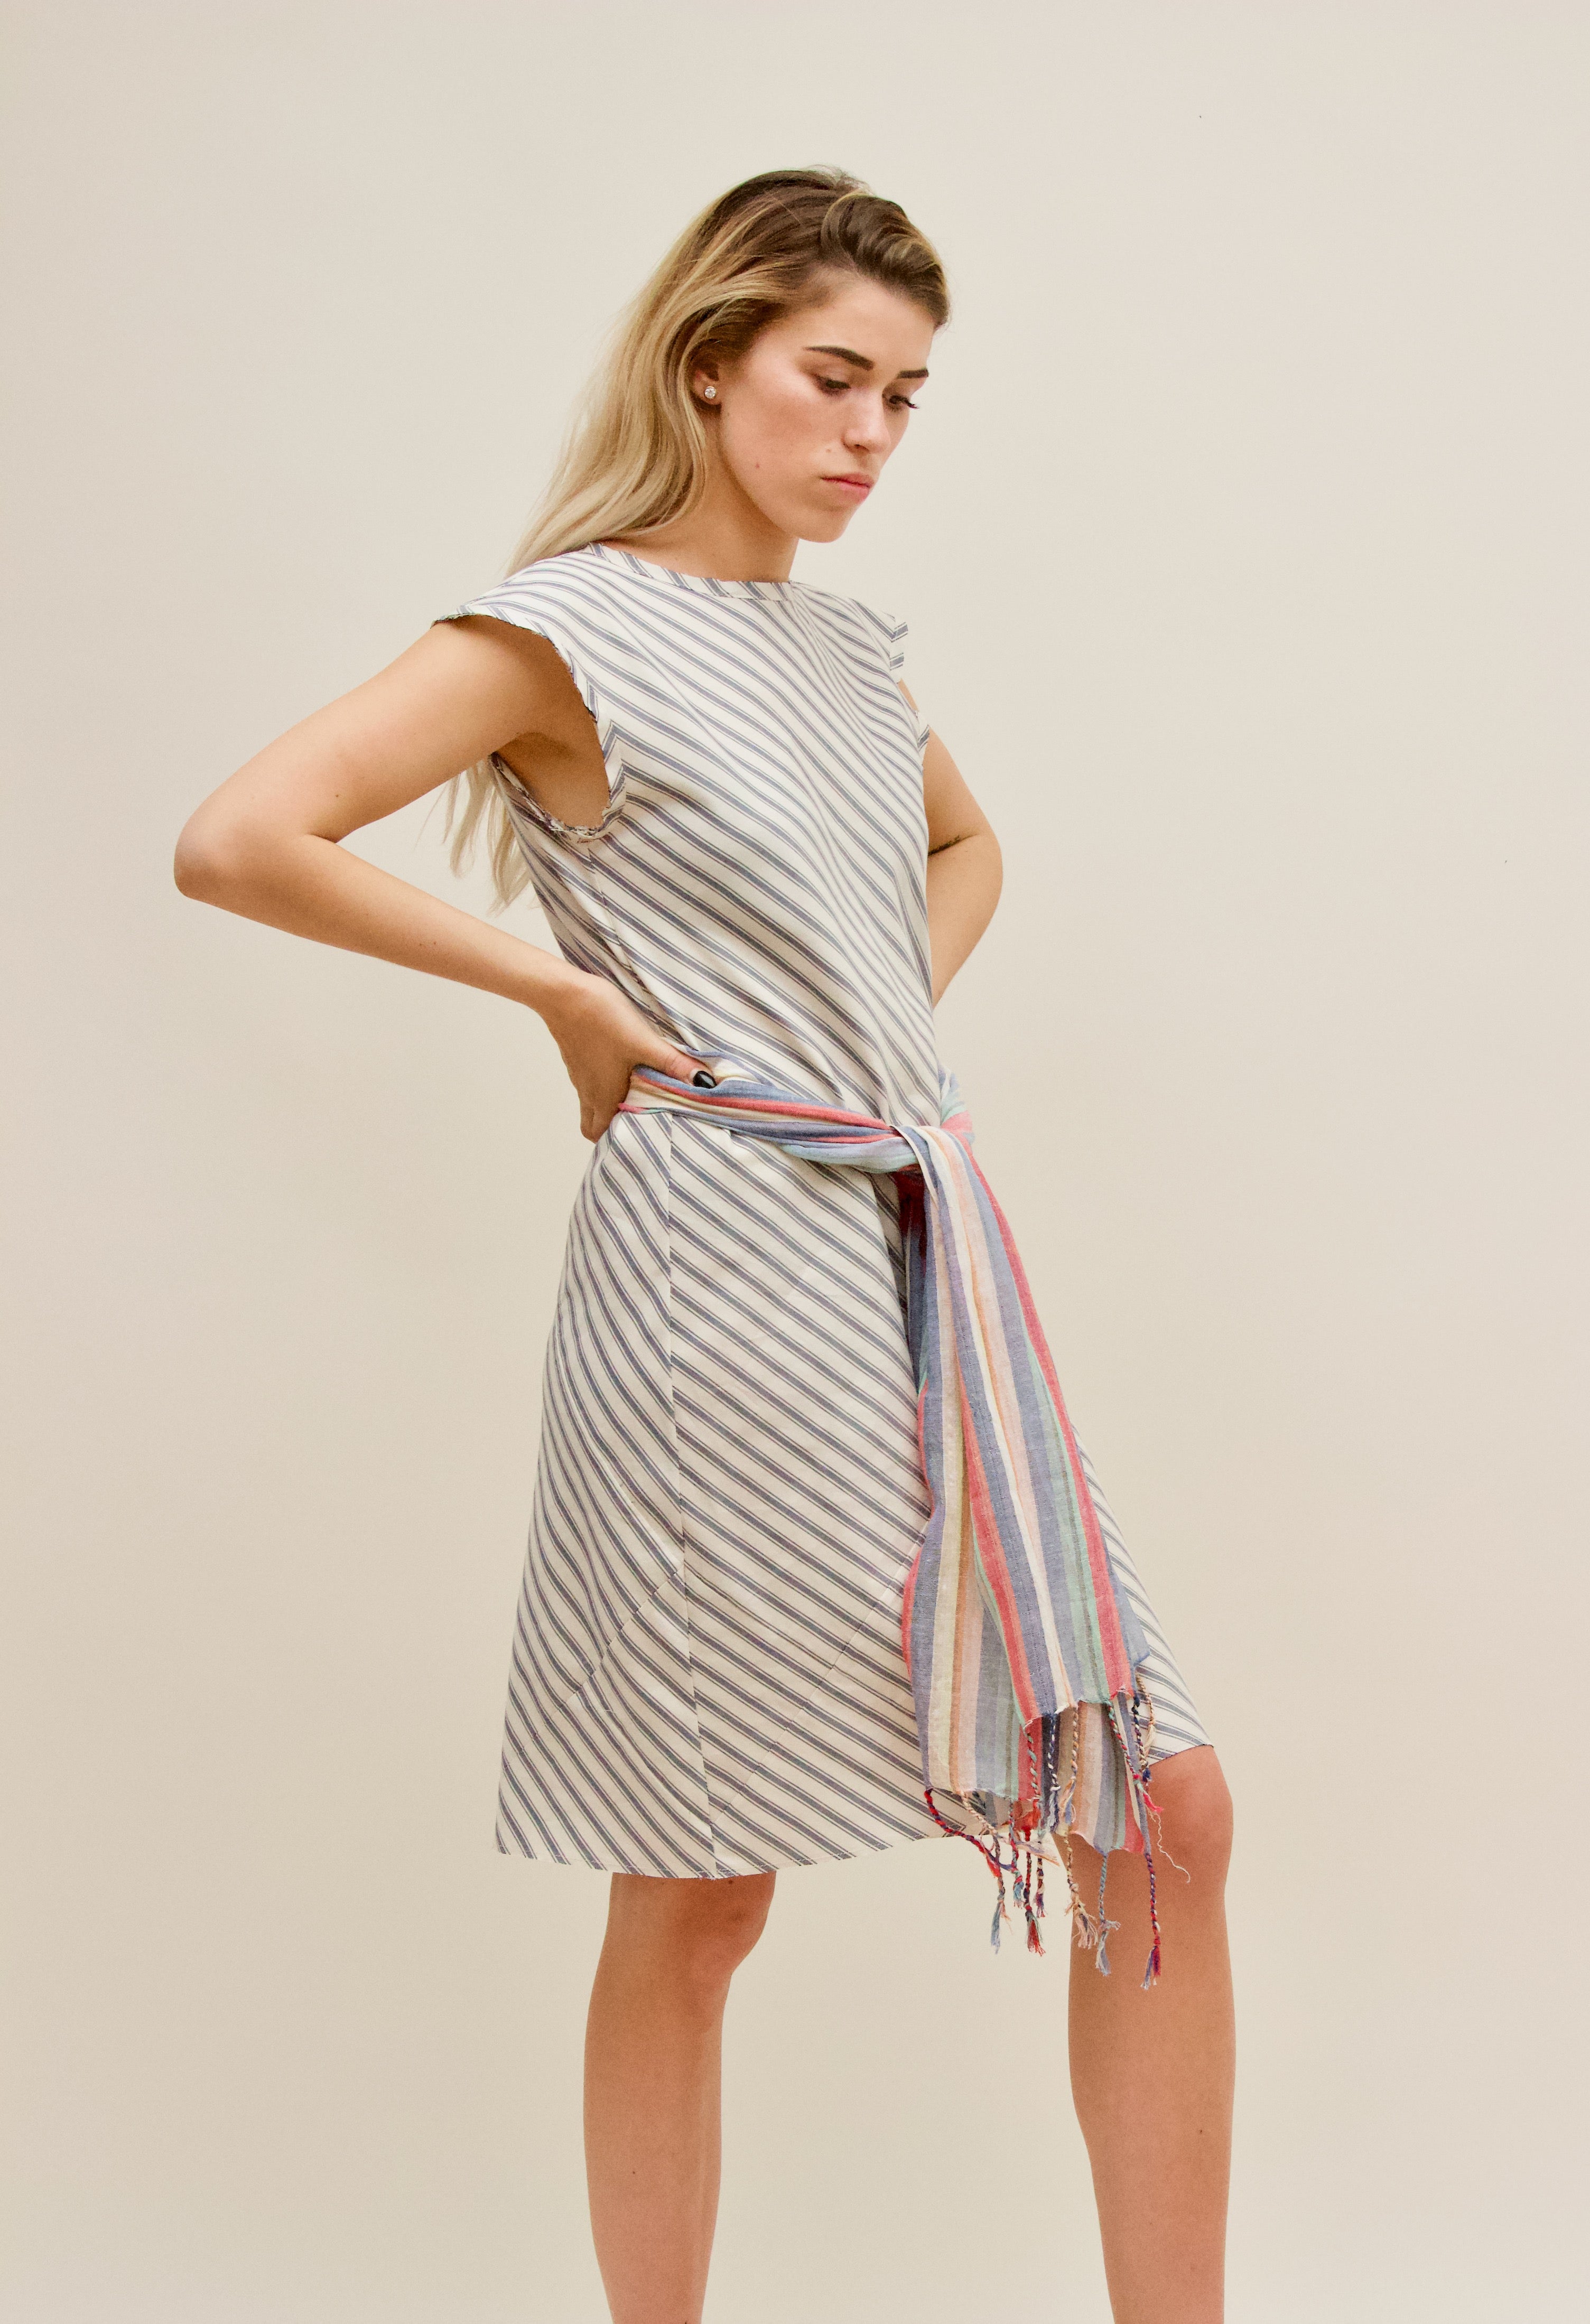 Rodilla Dress Ticking Striped Cotton